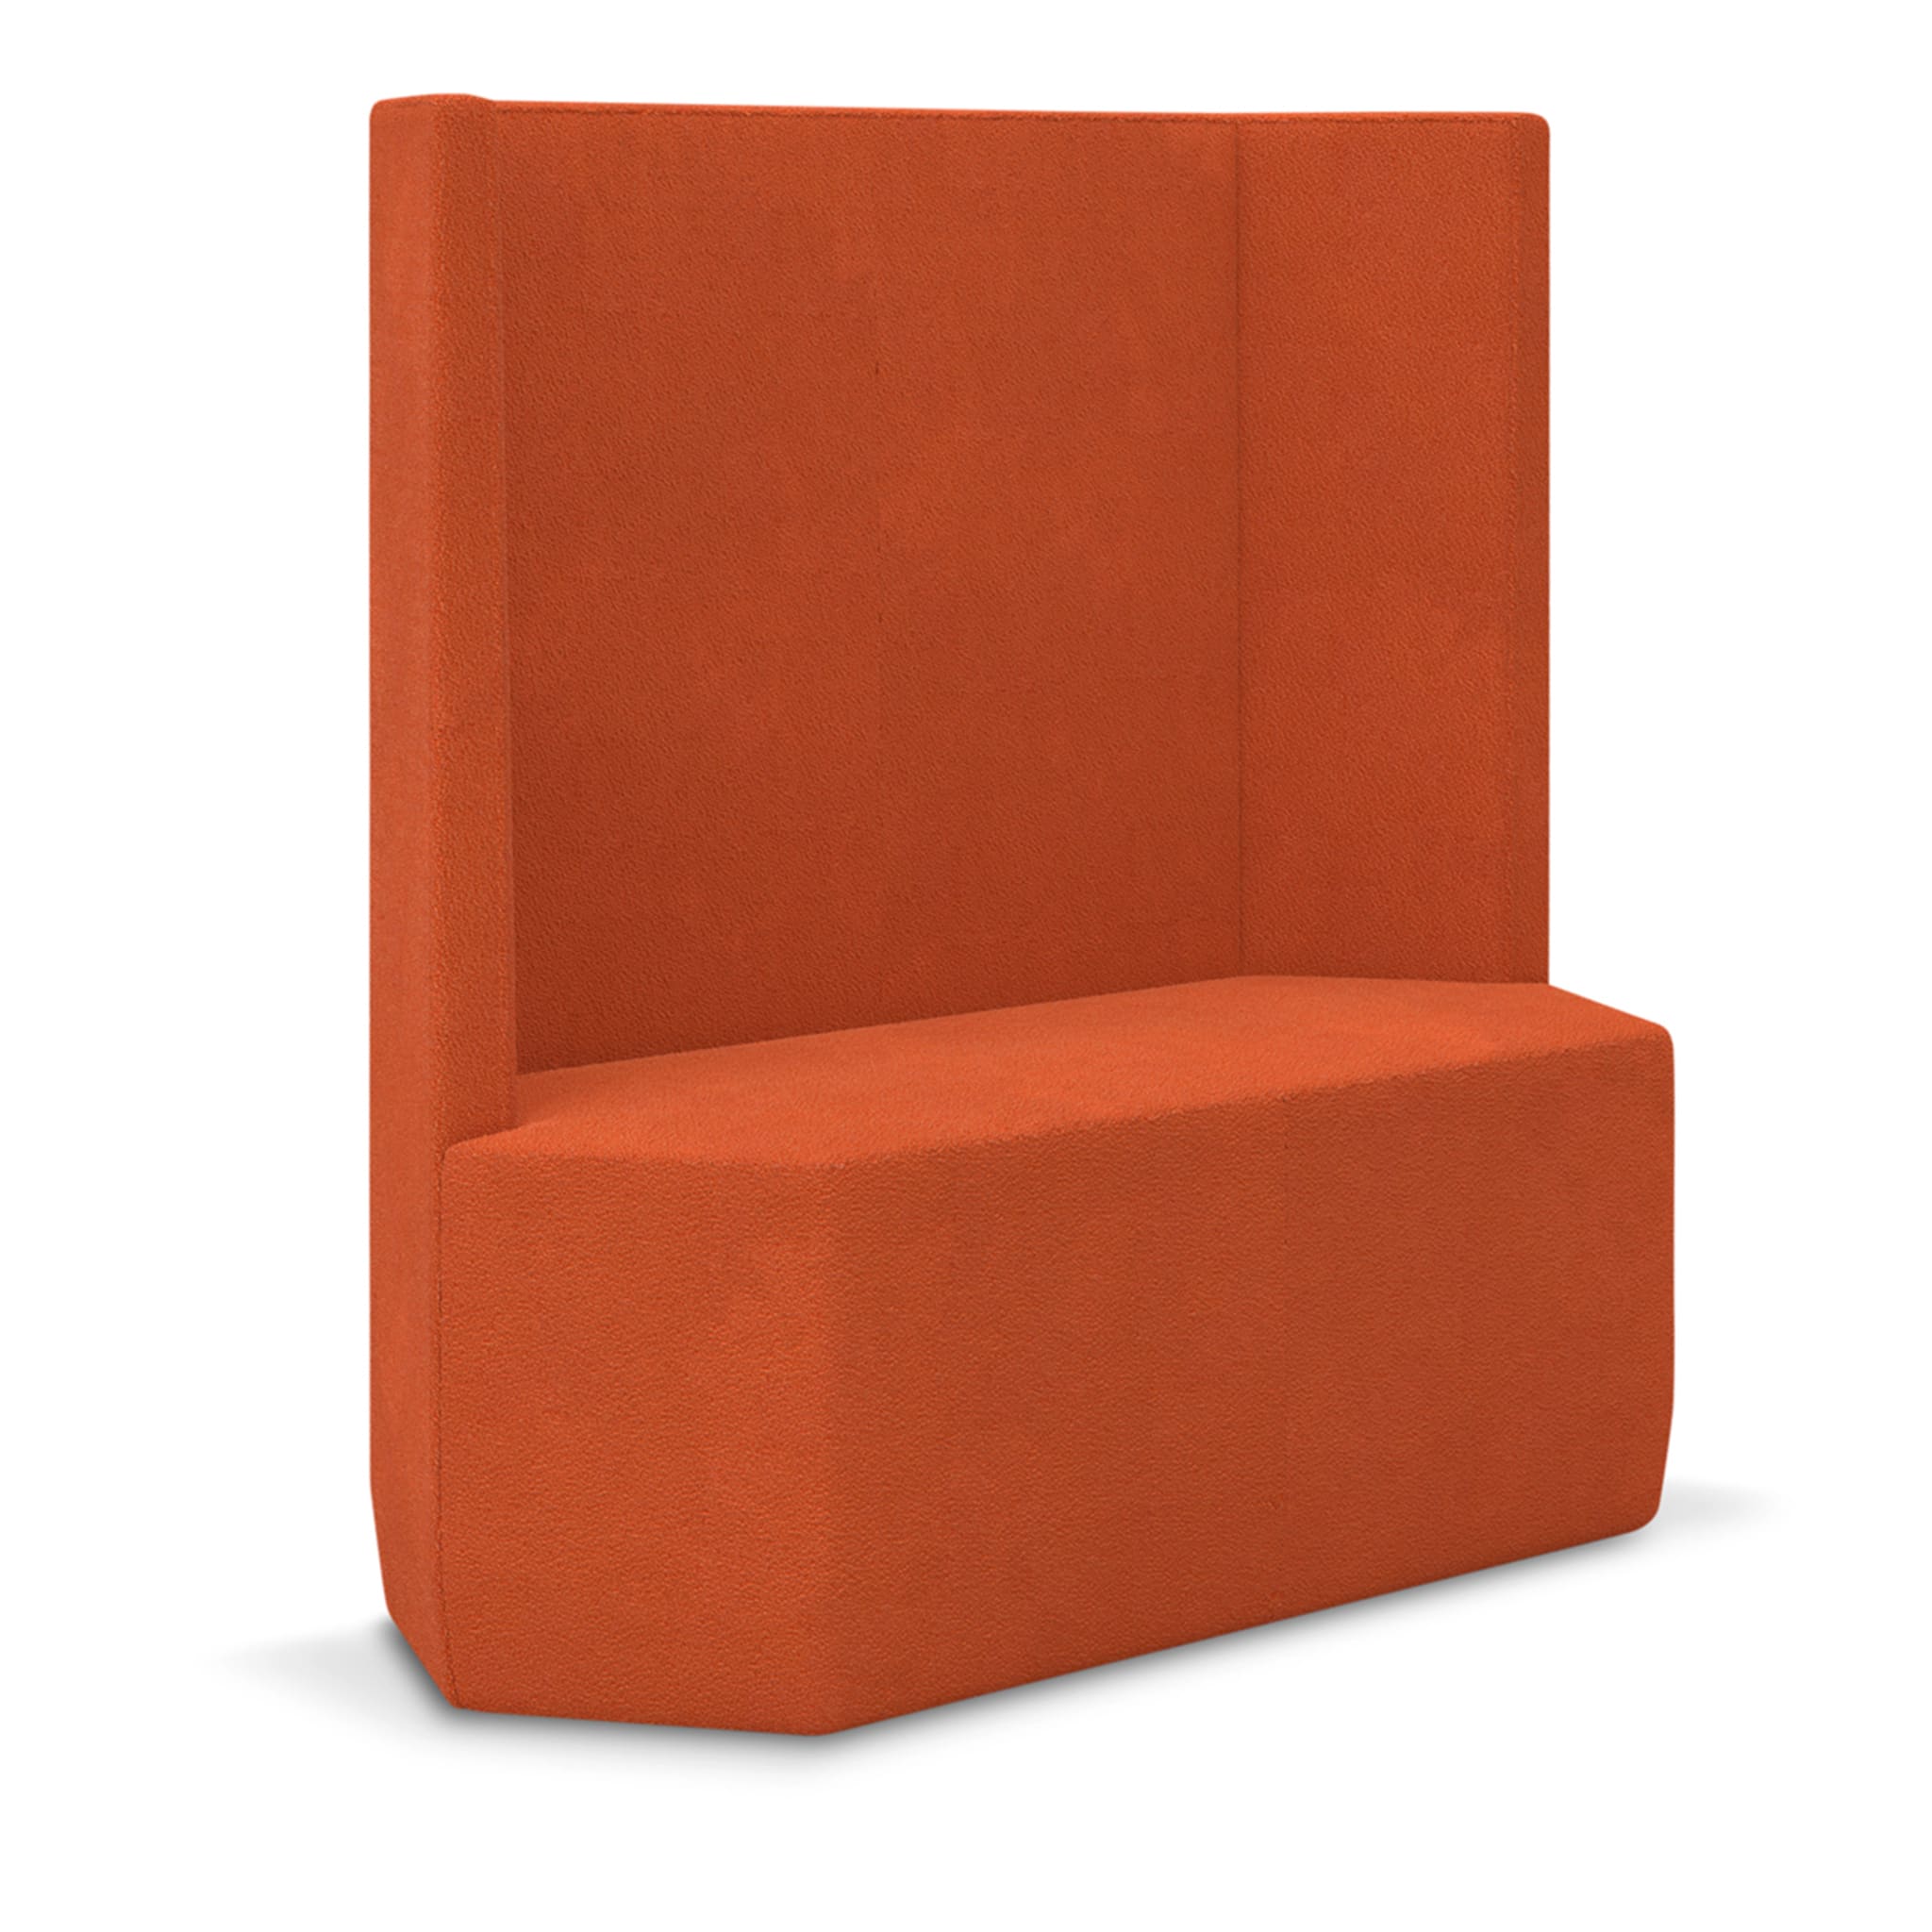 Tigram Großes orangefarbenes sofa von Italo Pertichini - Alternative Ansicht 1